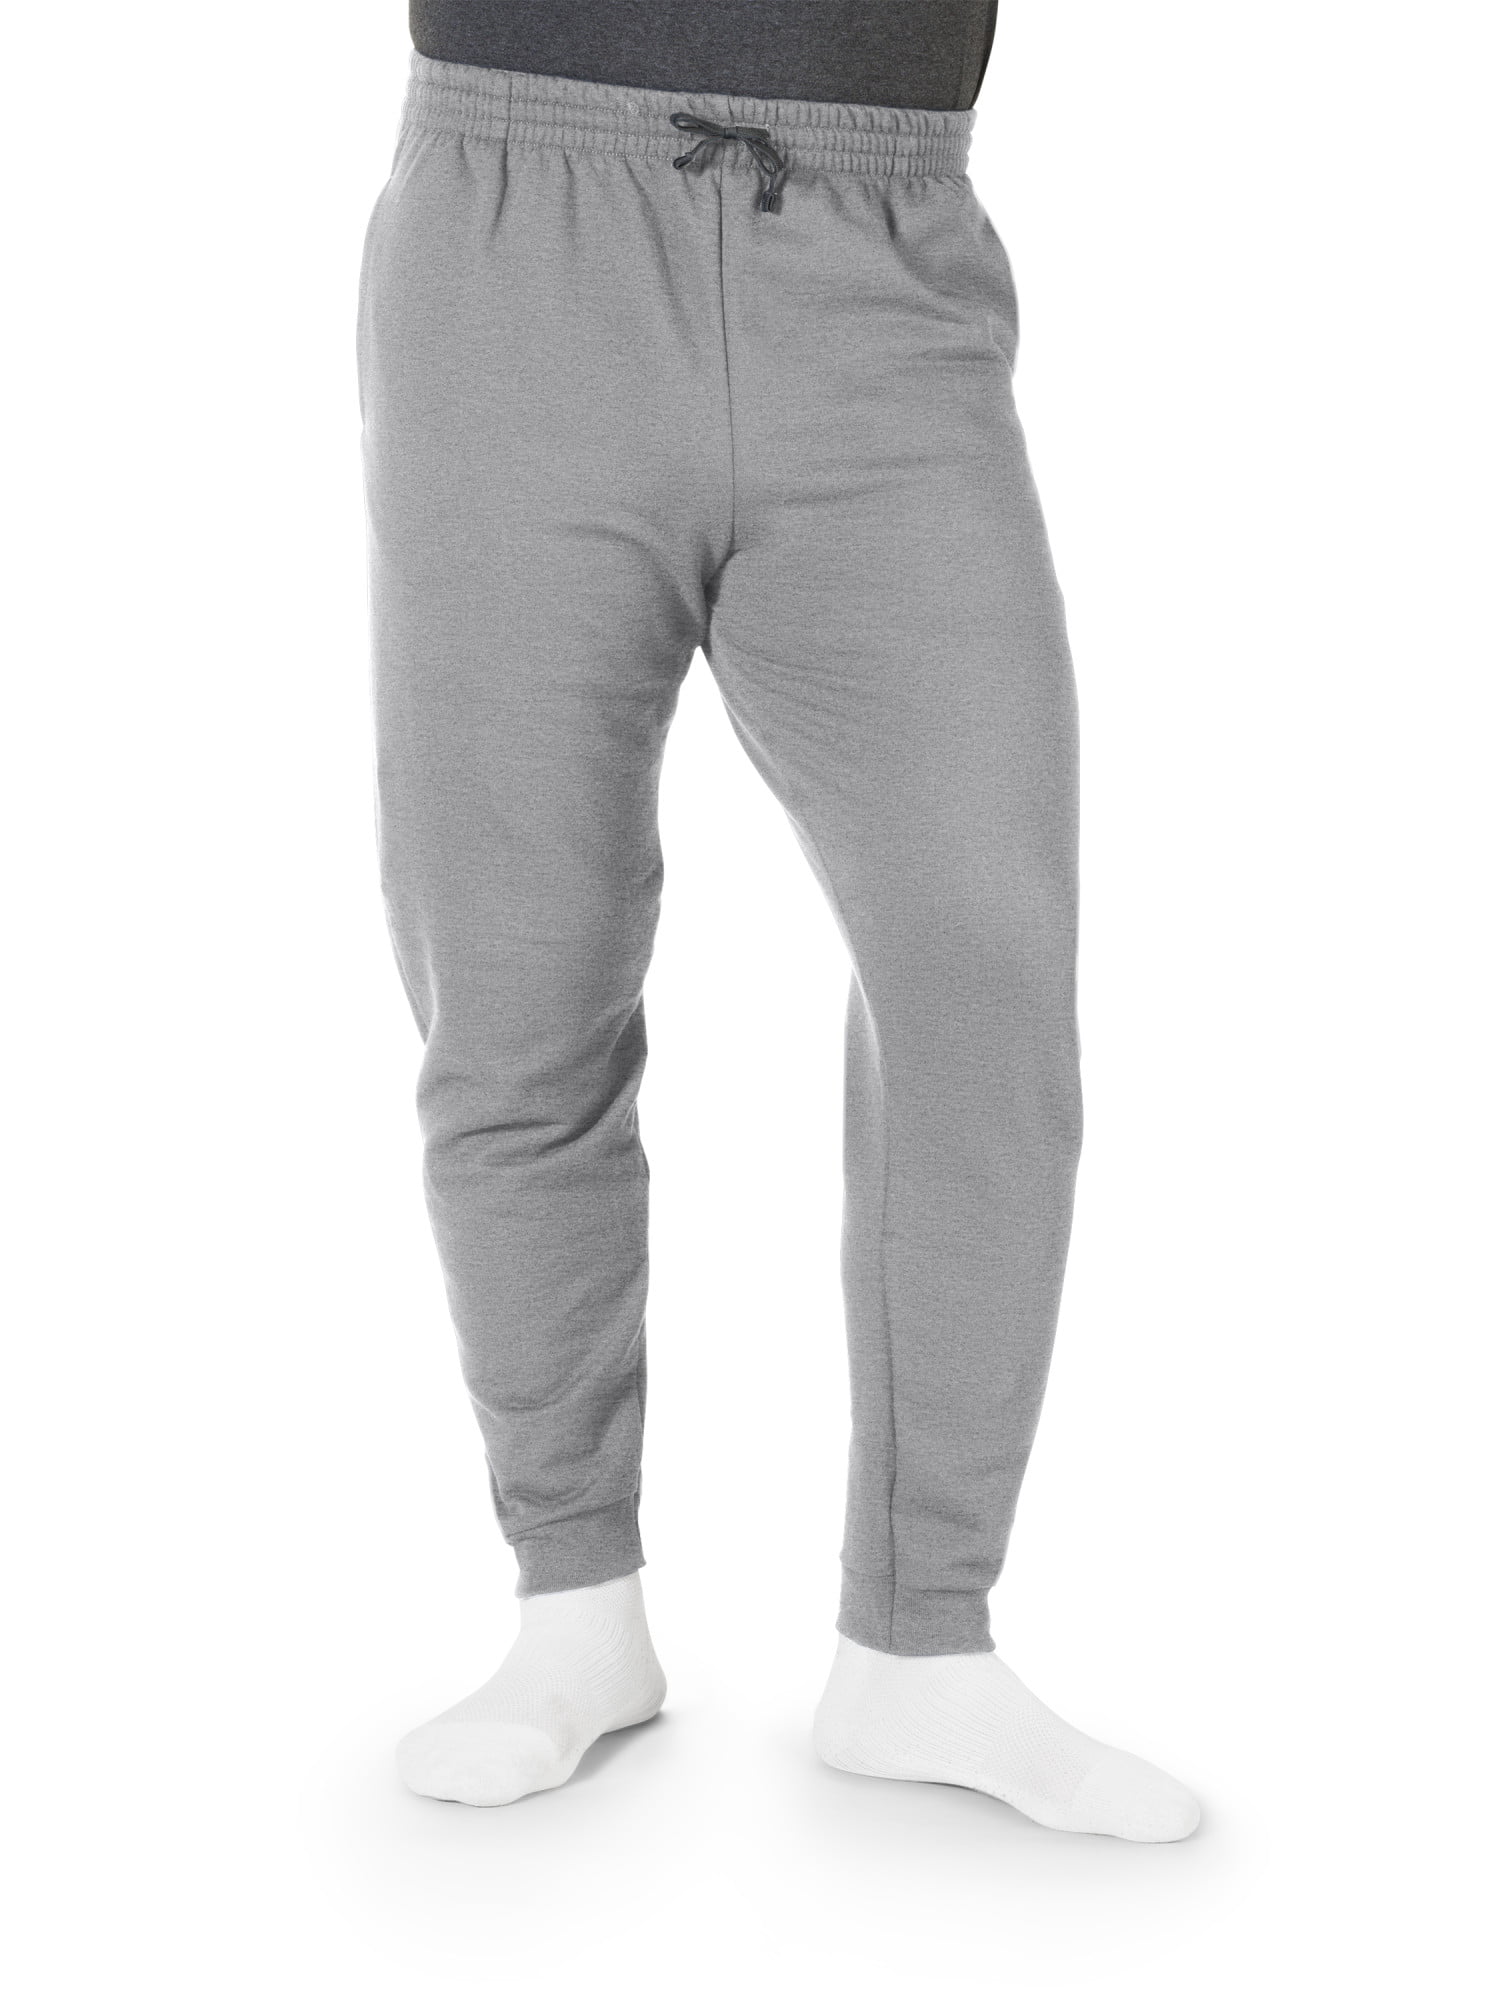 Men's Fleece Jogger Sweatpants, available up to 3XL - Walmart.com